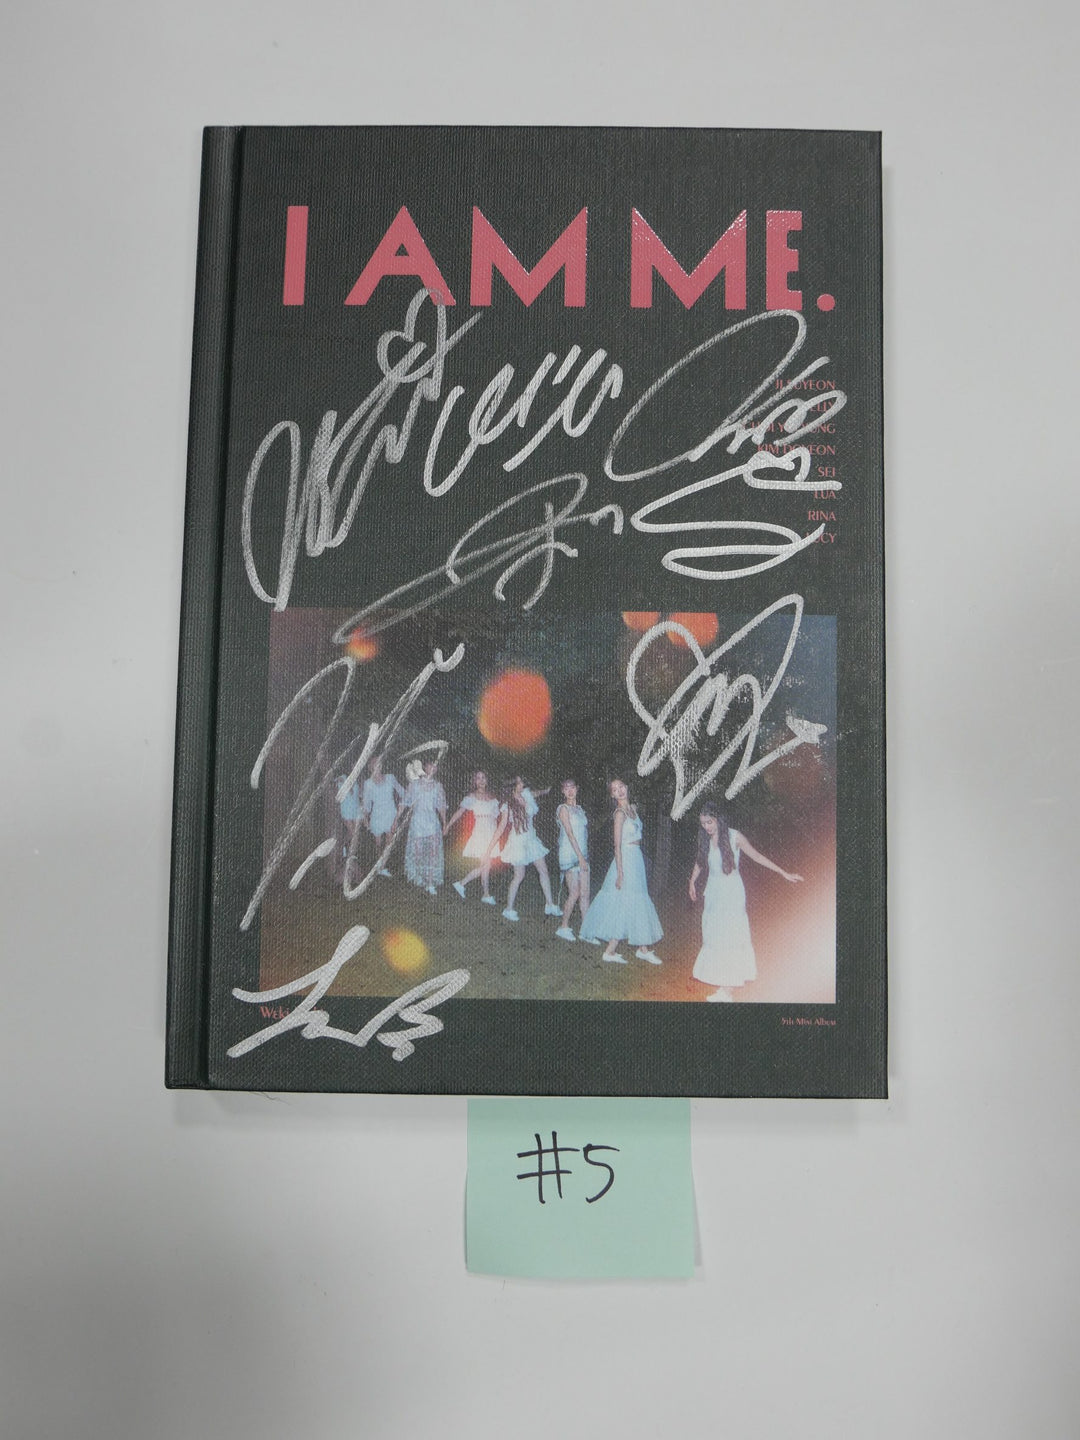 Weki Meki ‘I AM ME.’ - Hand Autographed(Signed) Promo Album